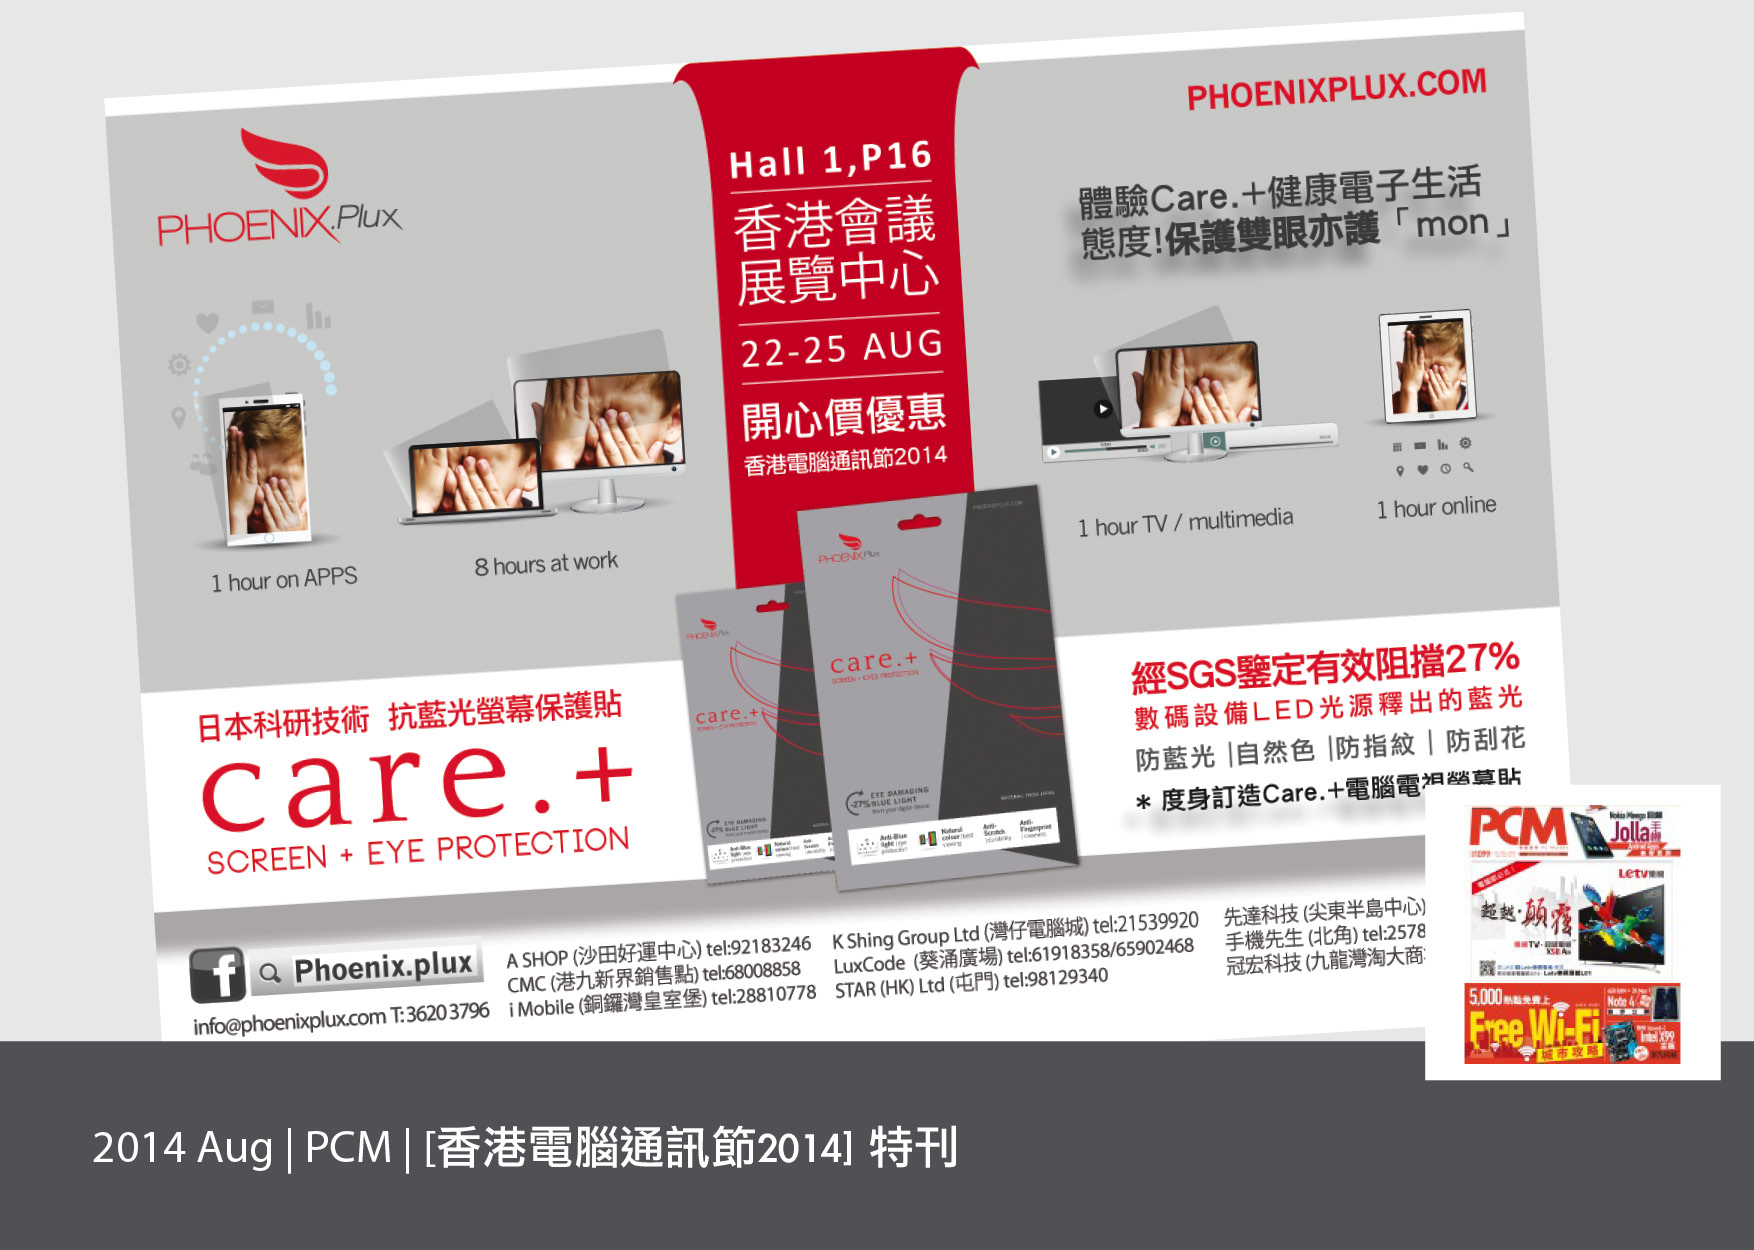 PCM HKCCF (Aug 2014)